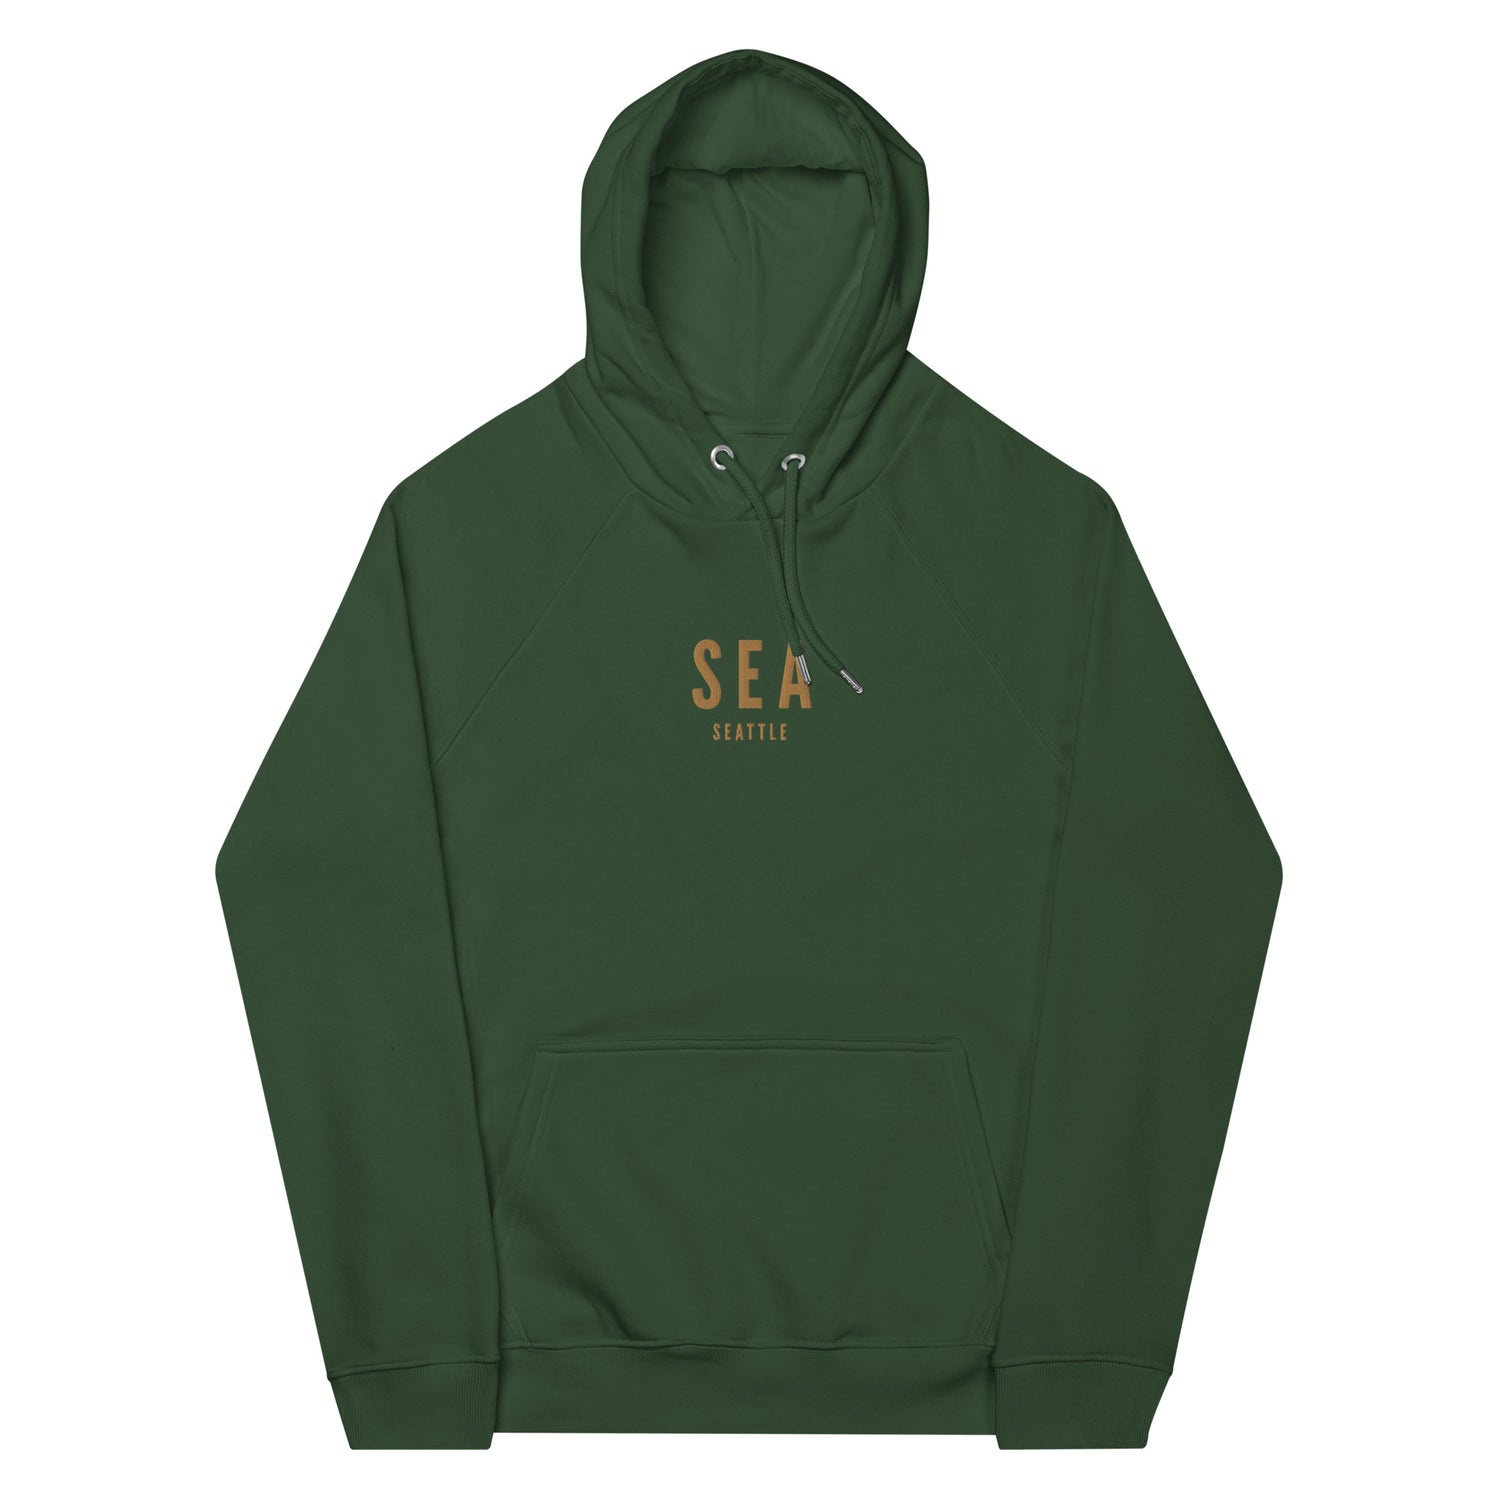 Seattle Washington Hoodies and Sweatshirts • SEA Airport Code